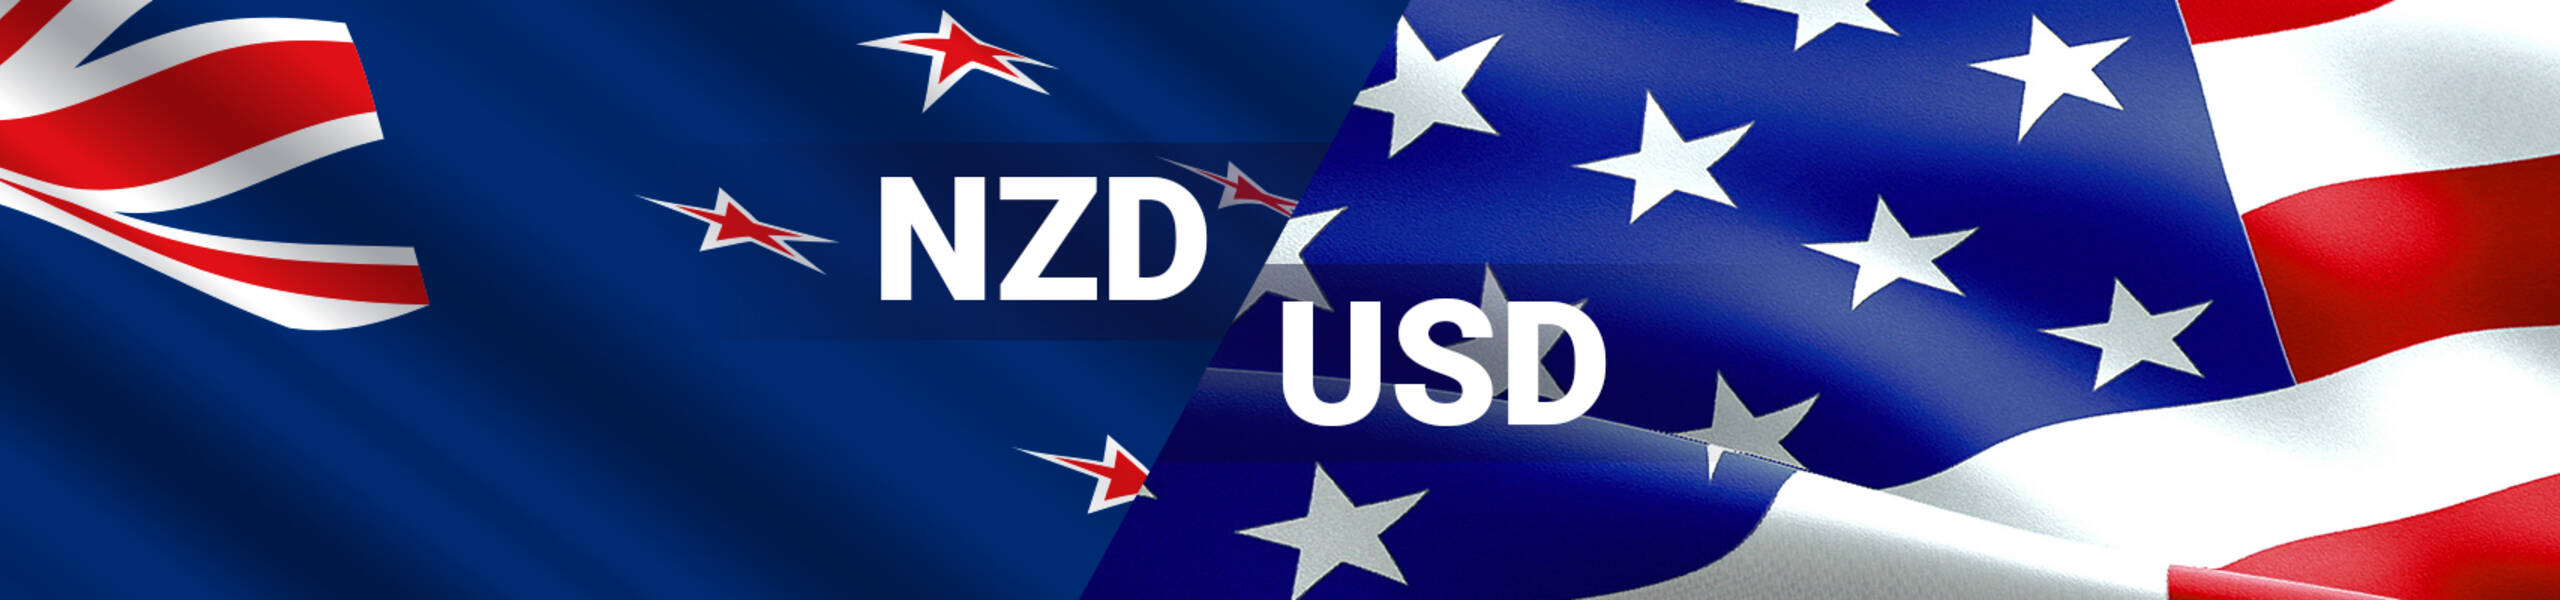 NZD/USD: kiwi is on the crossroads